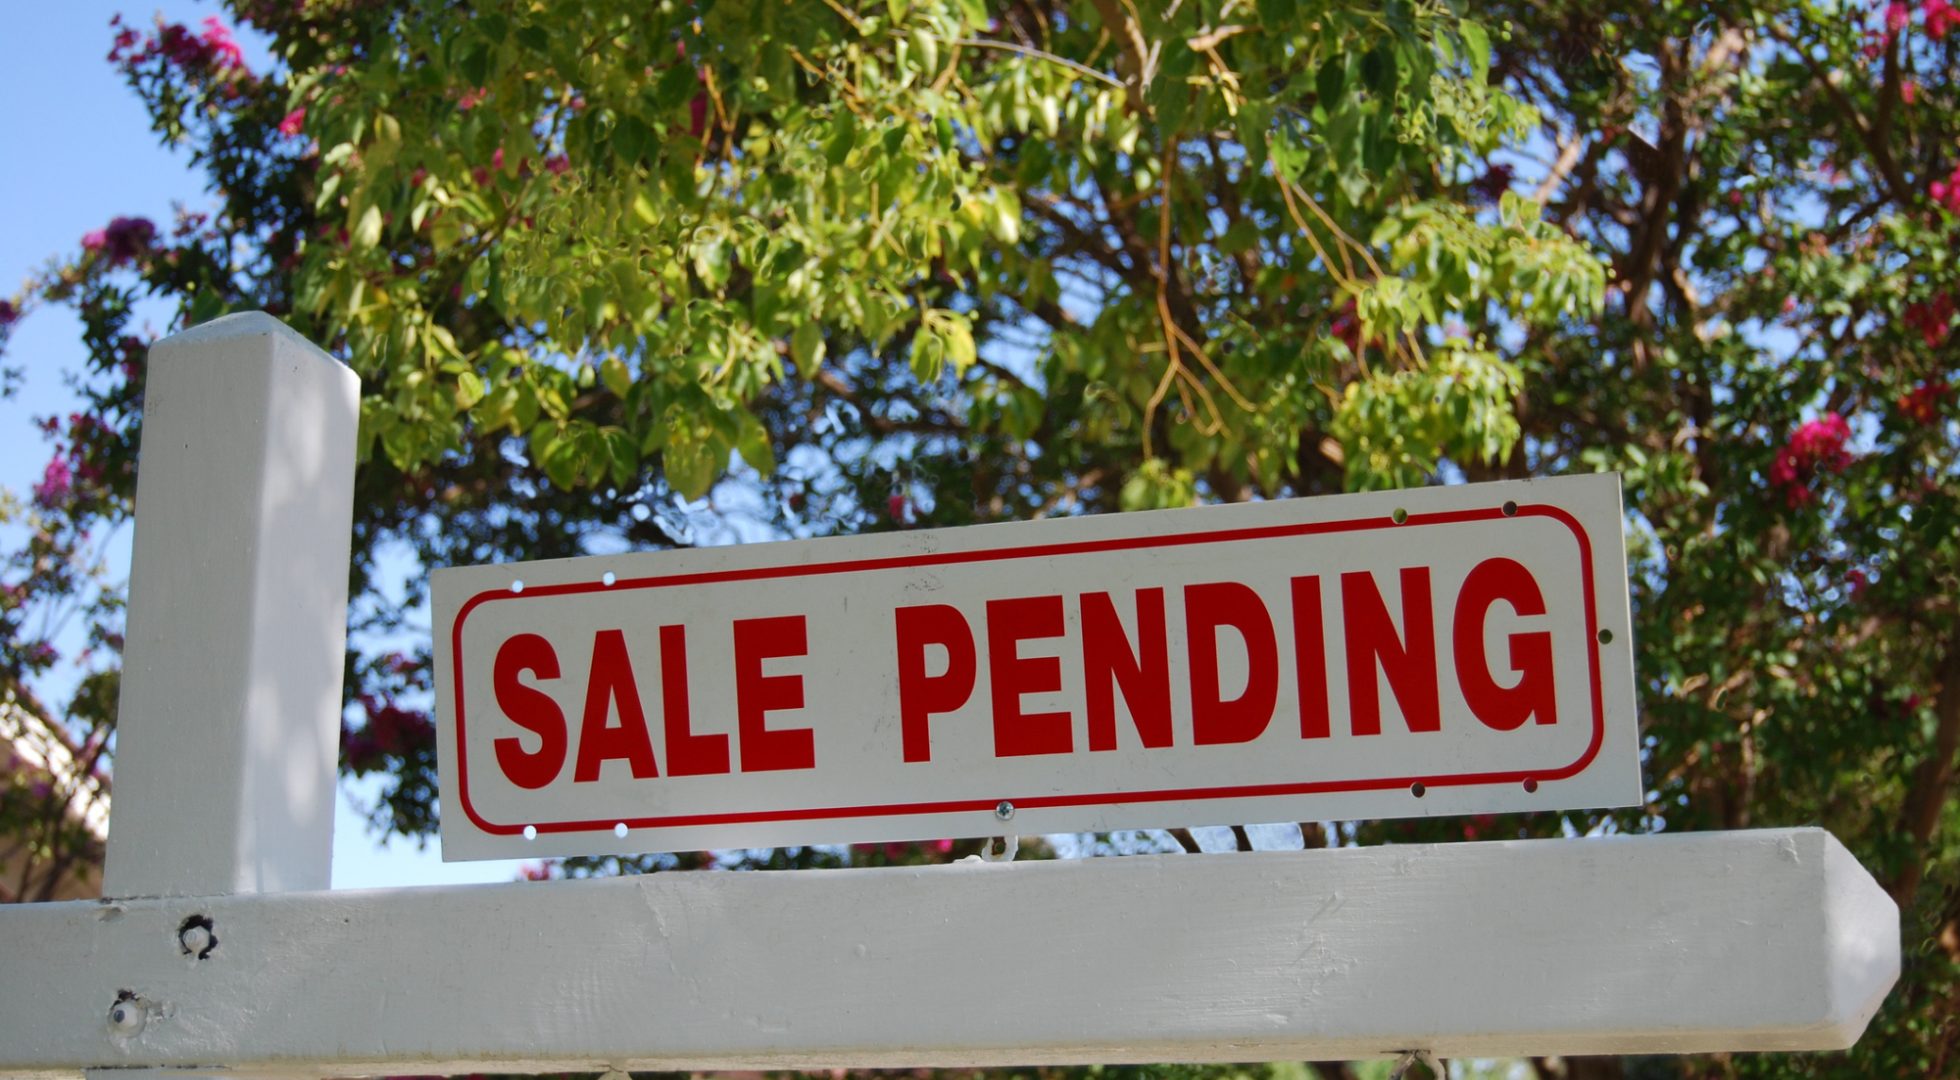 pending home sales